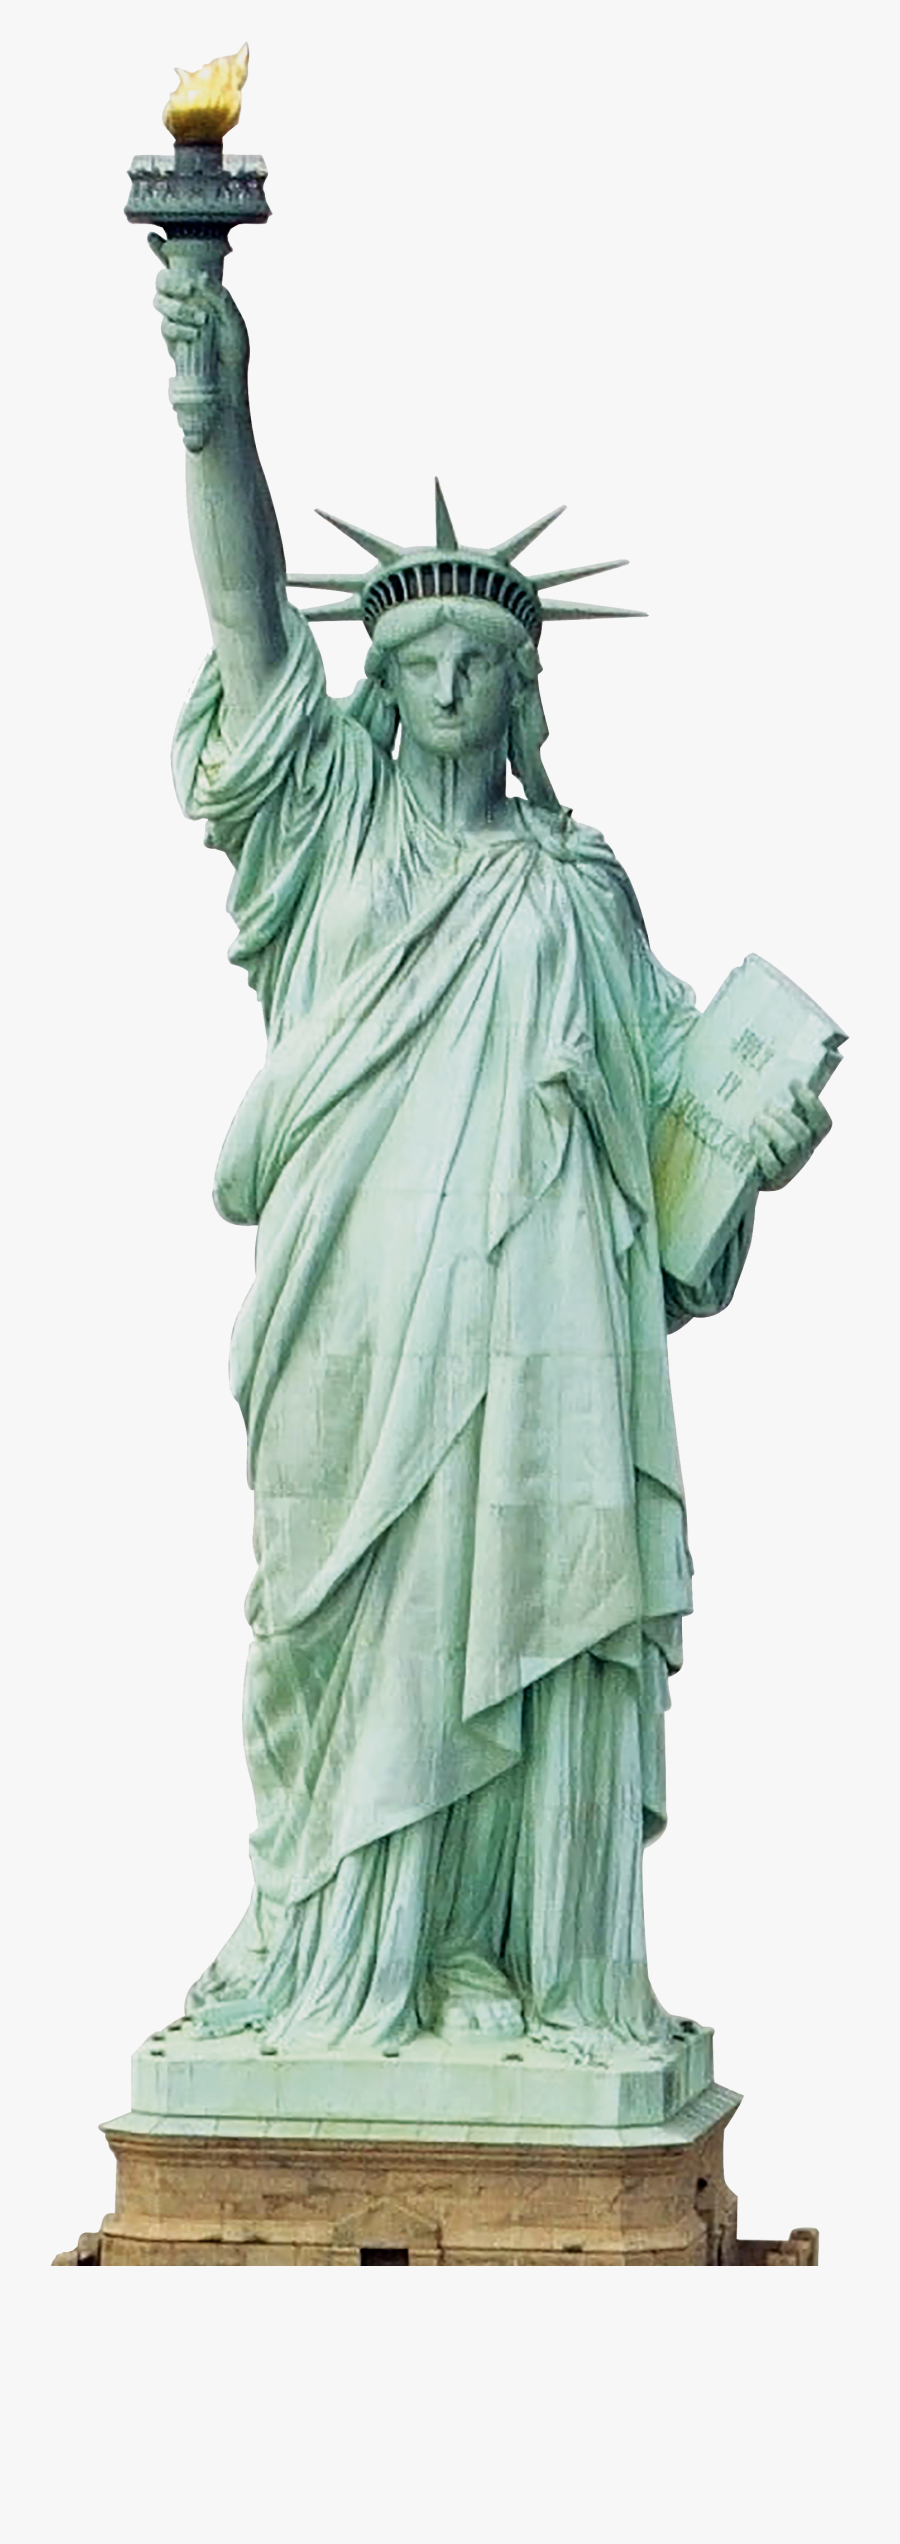 Statue Of Liberty"
								 Title="statue Of Liberty - Statue Of Liberty, Transparent Clipart